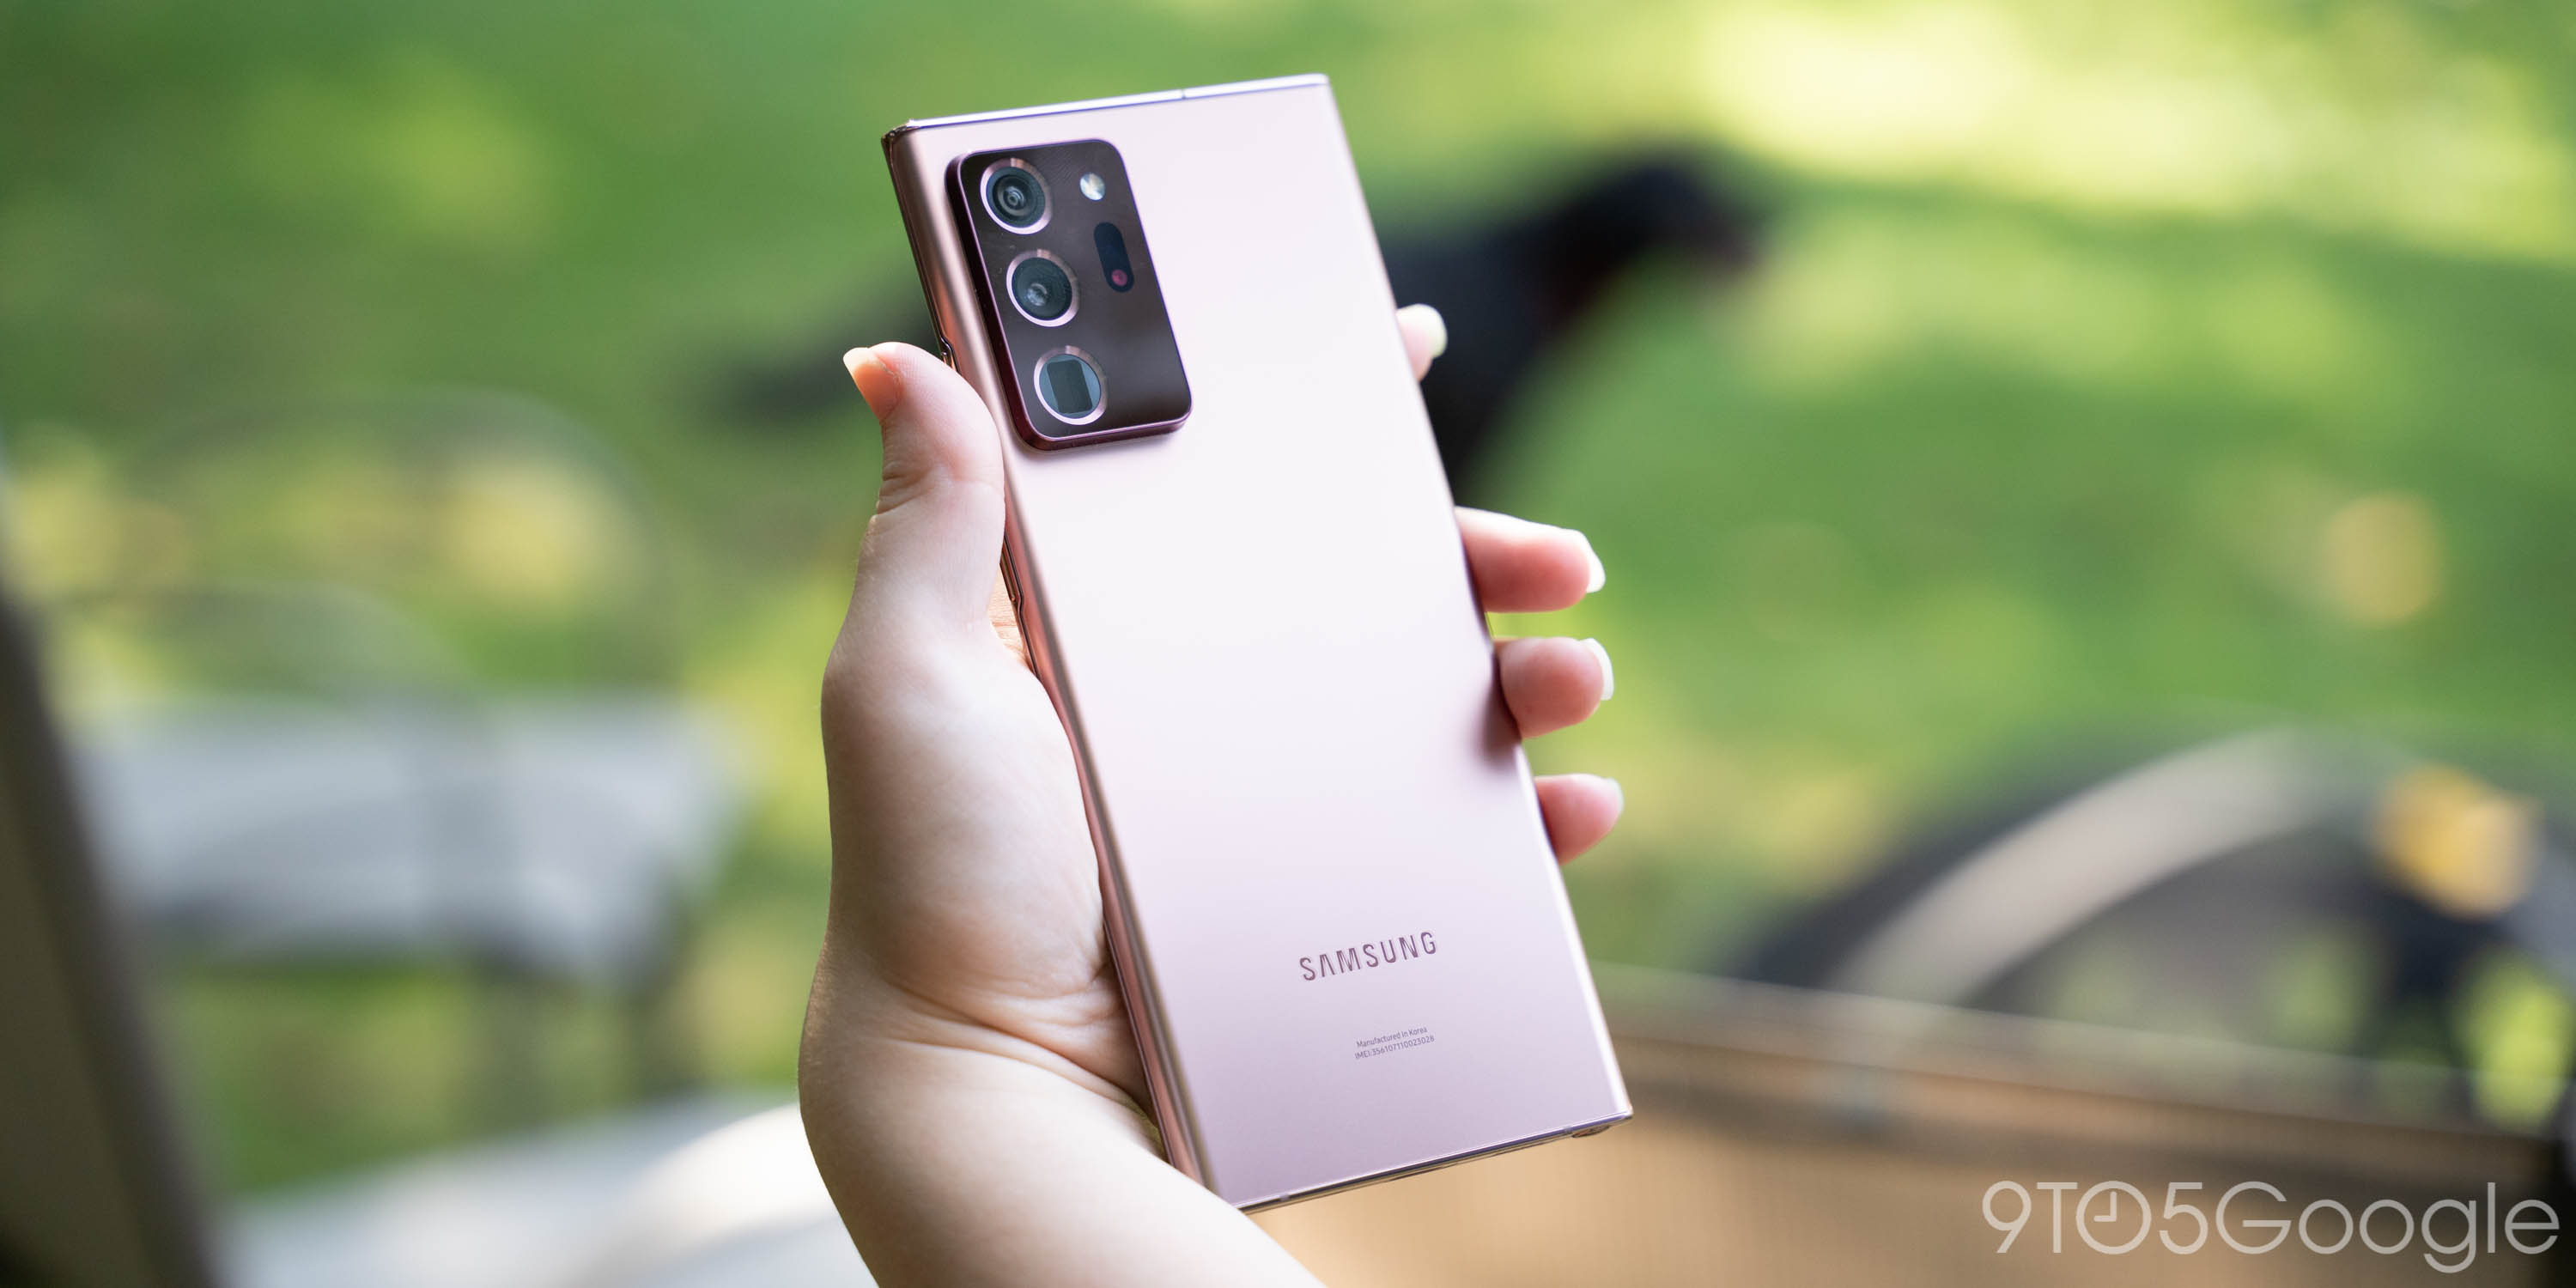 Review - Samsung Galaxy Note20 Ultra: So many productivity